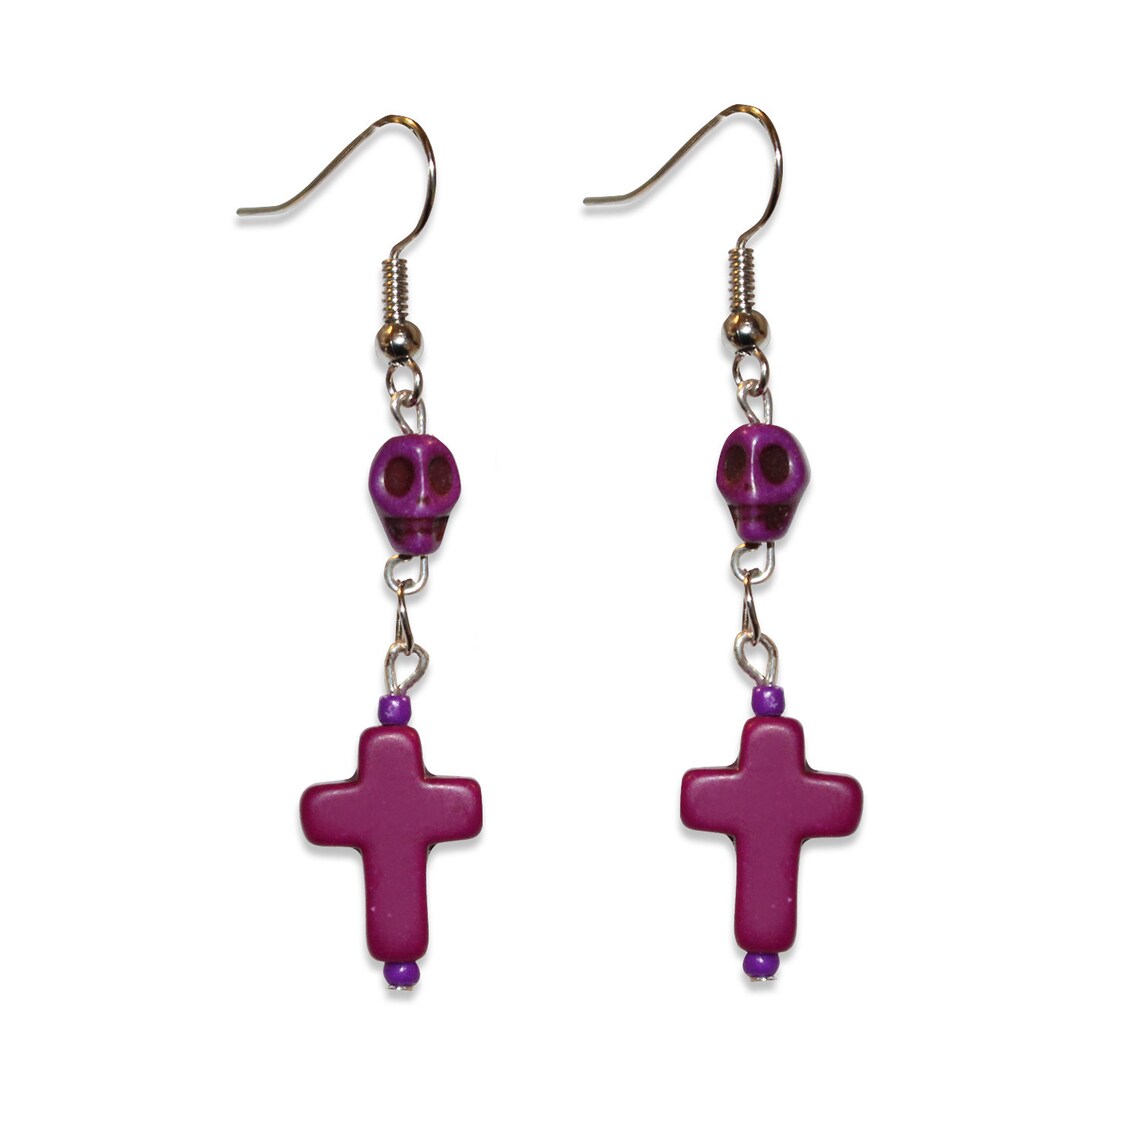 Dia De Los Muertos Skull and Cross Earrings, Howlite Gem Stone Womens Skull Earrings in Purple